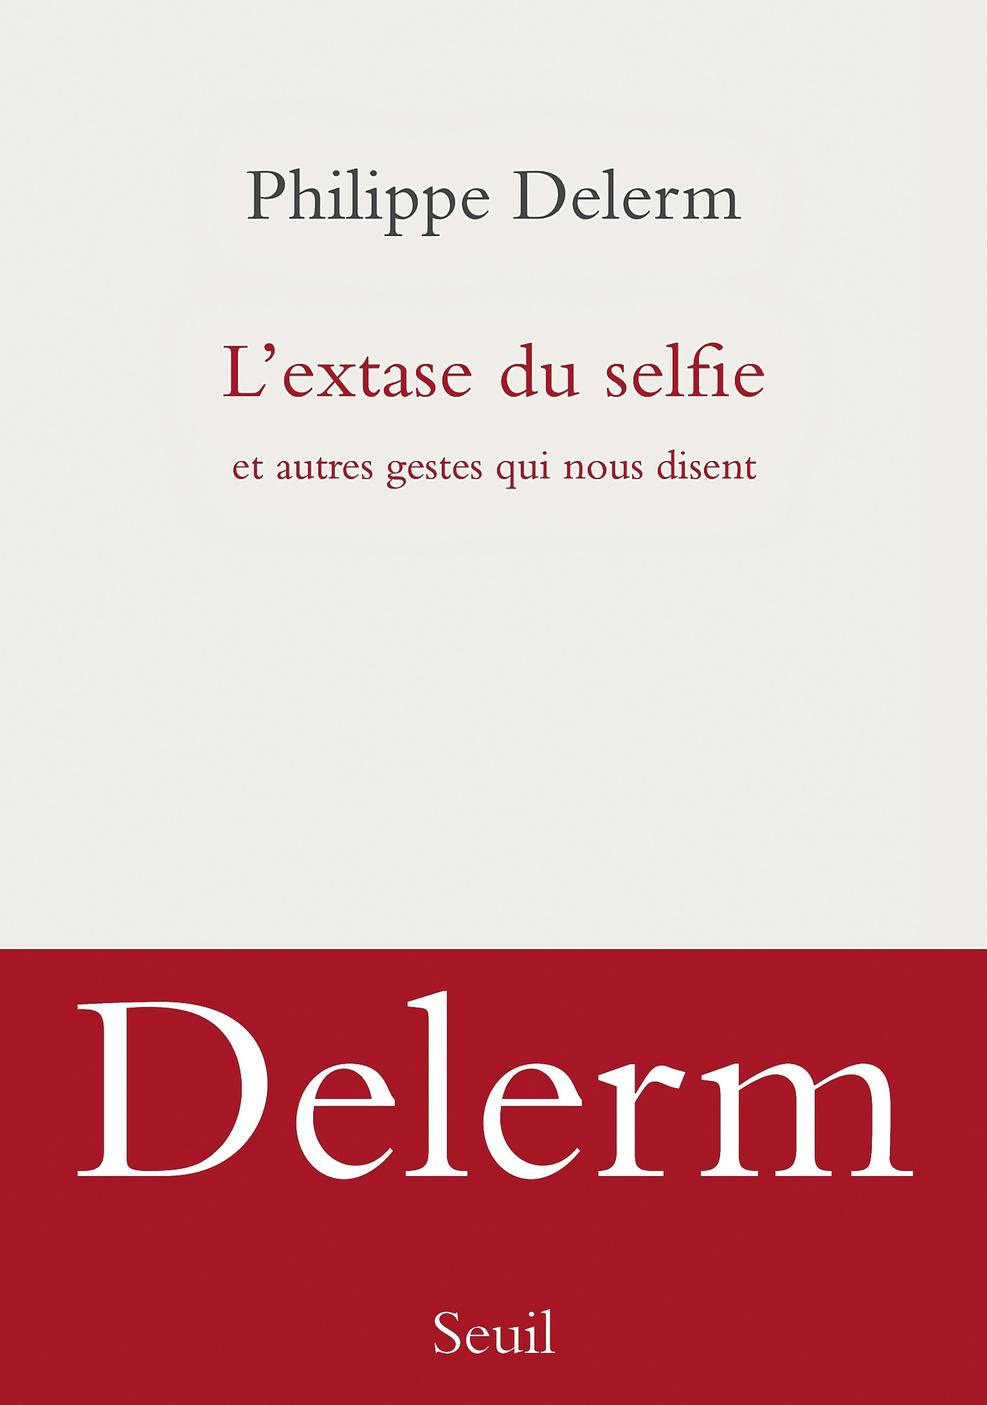 Philippe Delerm en 5 mots: 